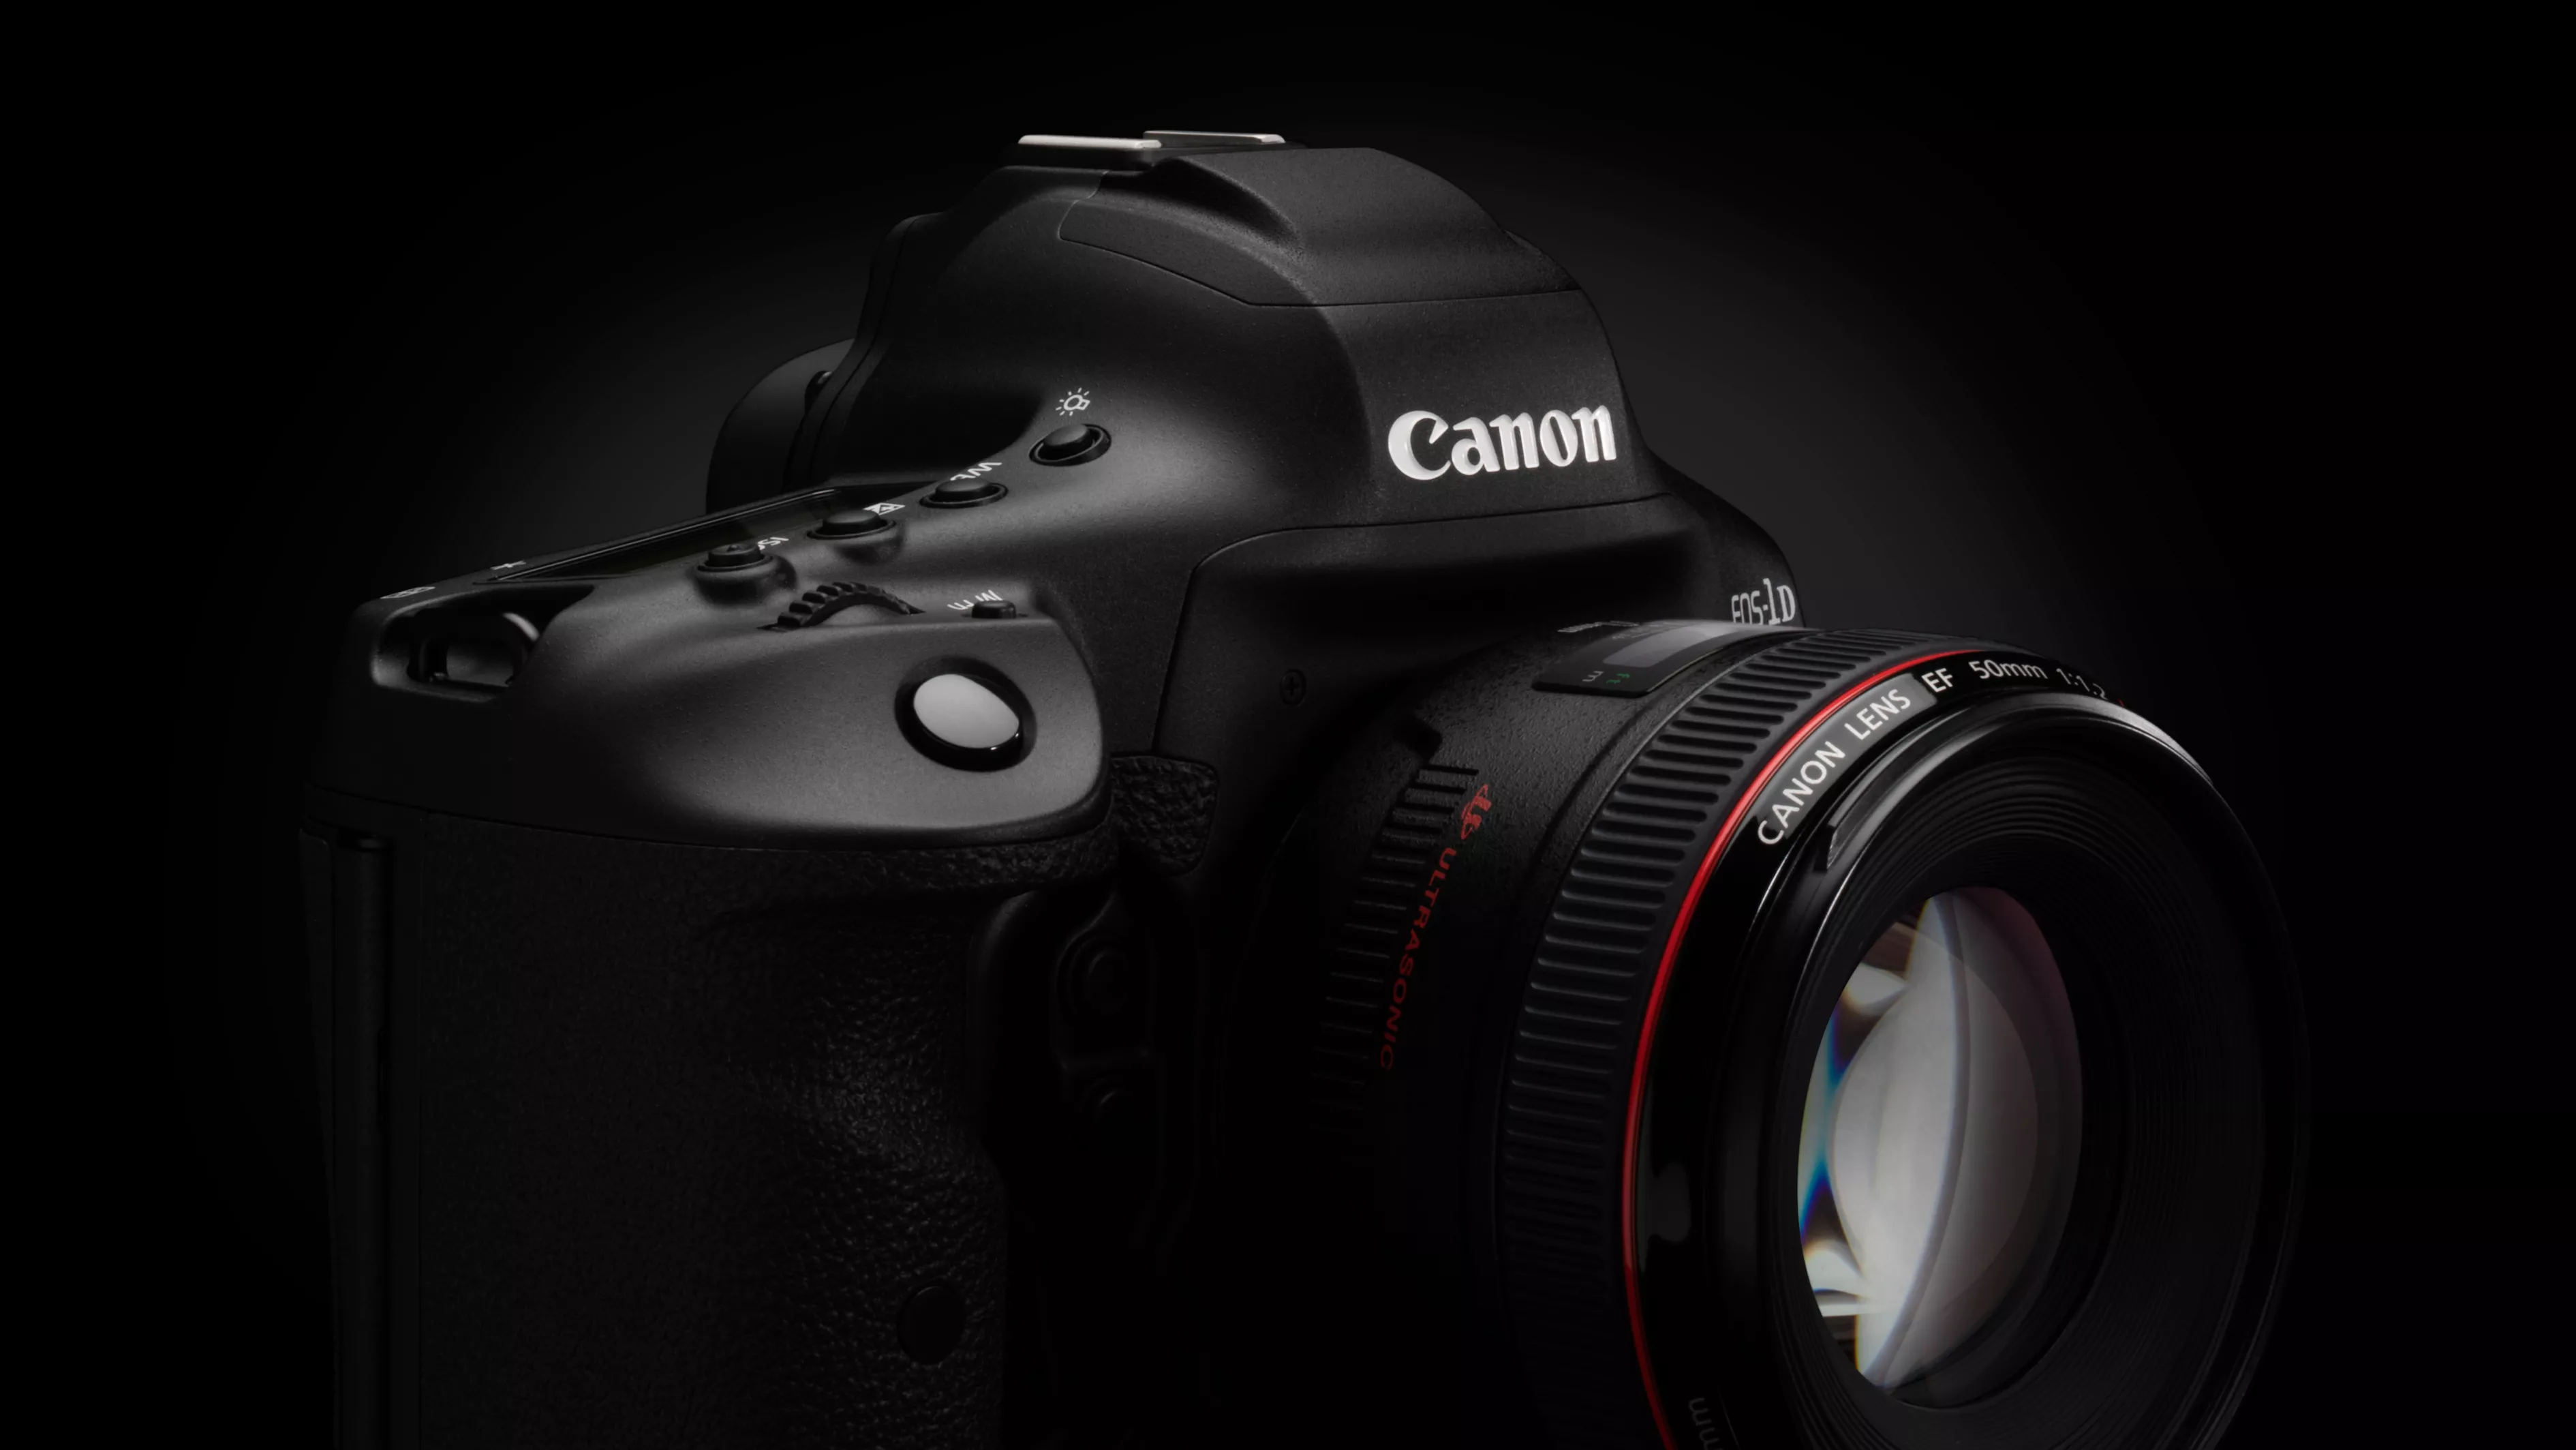 Professional Canon Photographic equipment including Camera bodies